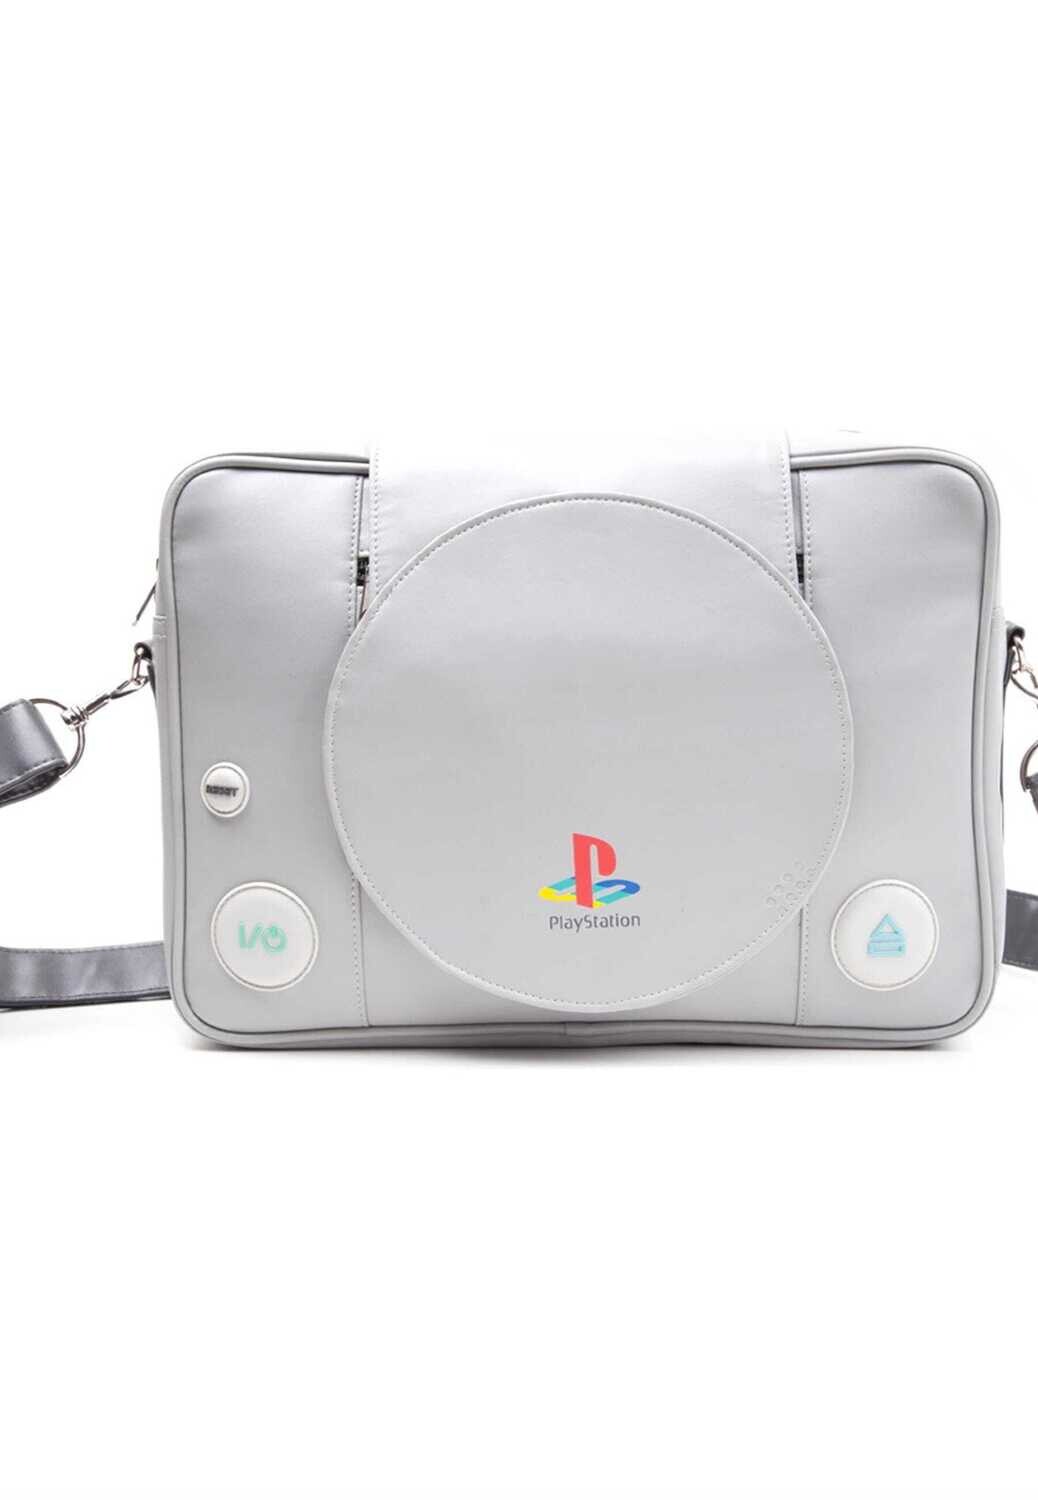 Playstation - Shaped Playstation messenger bag